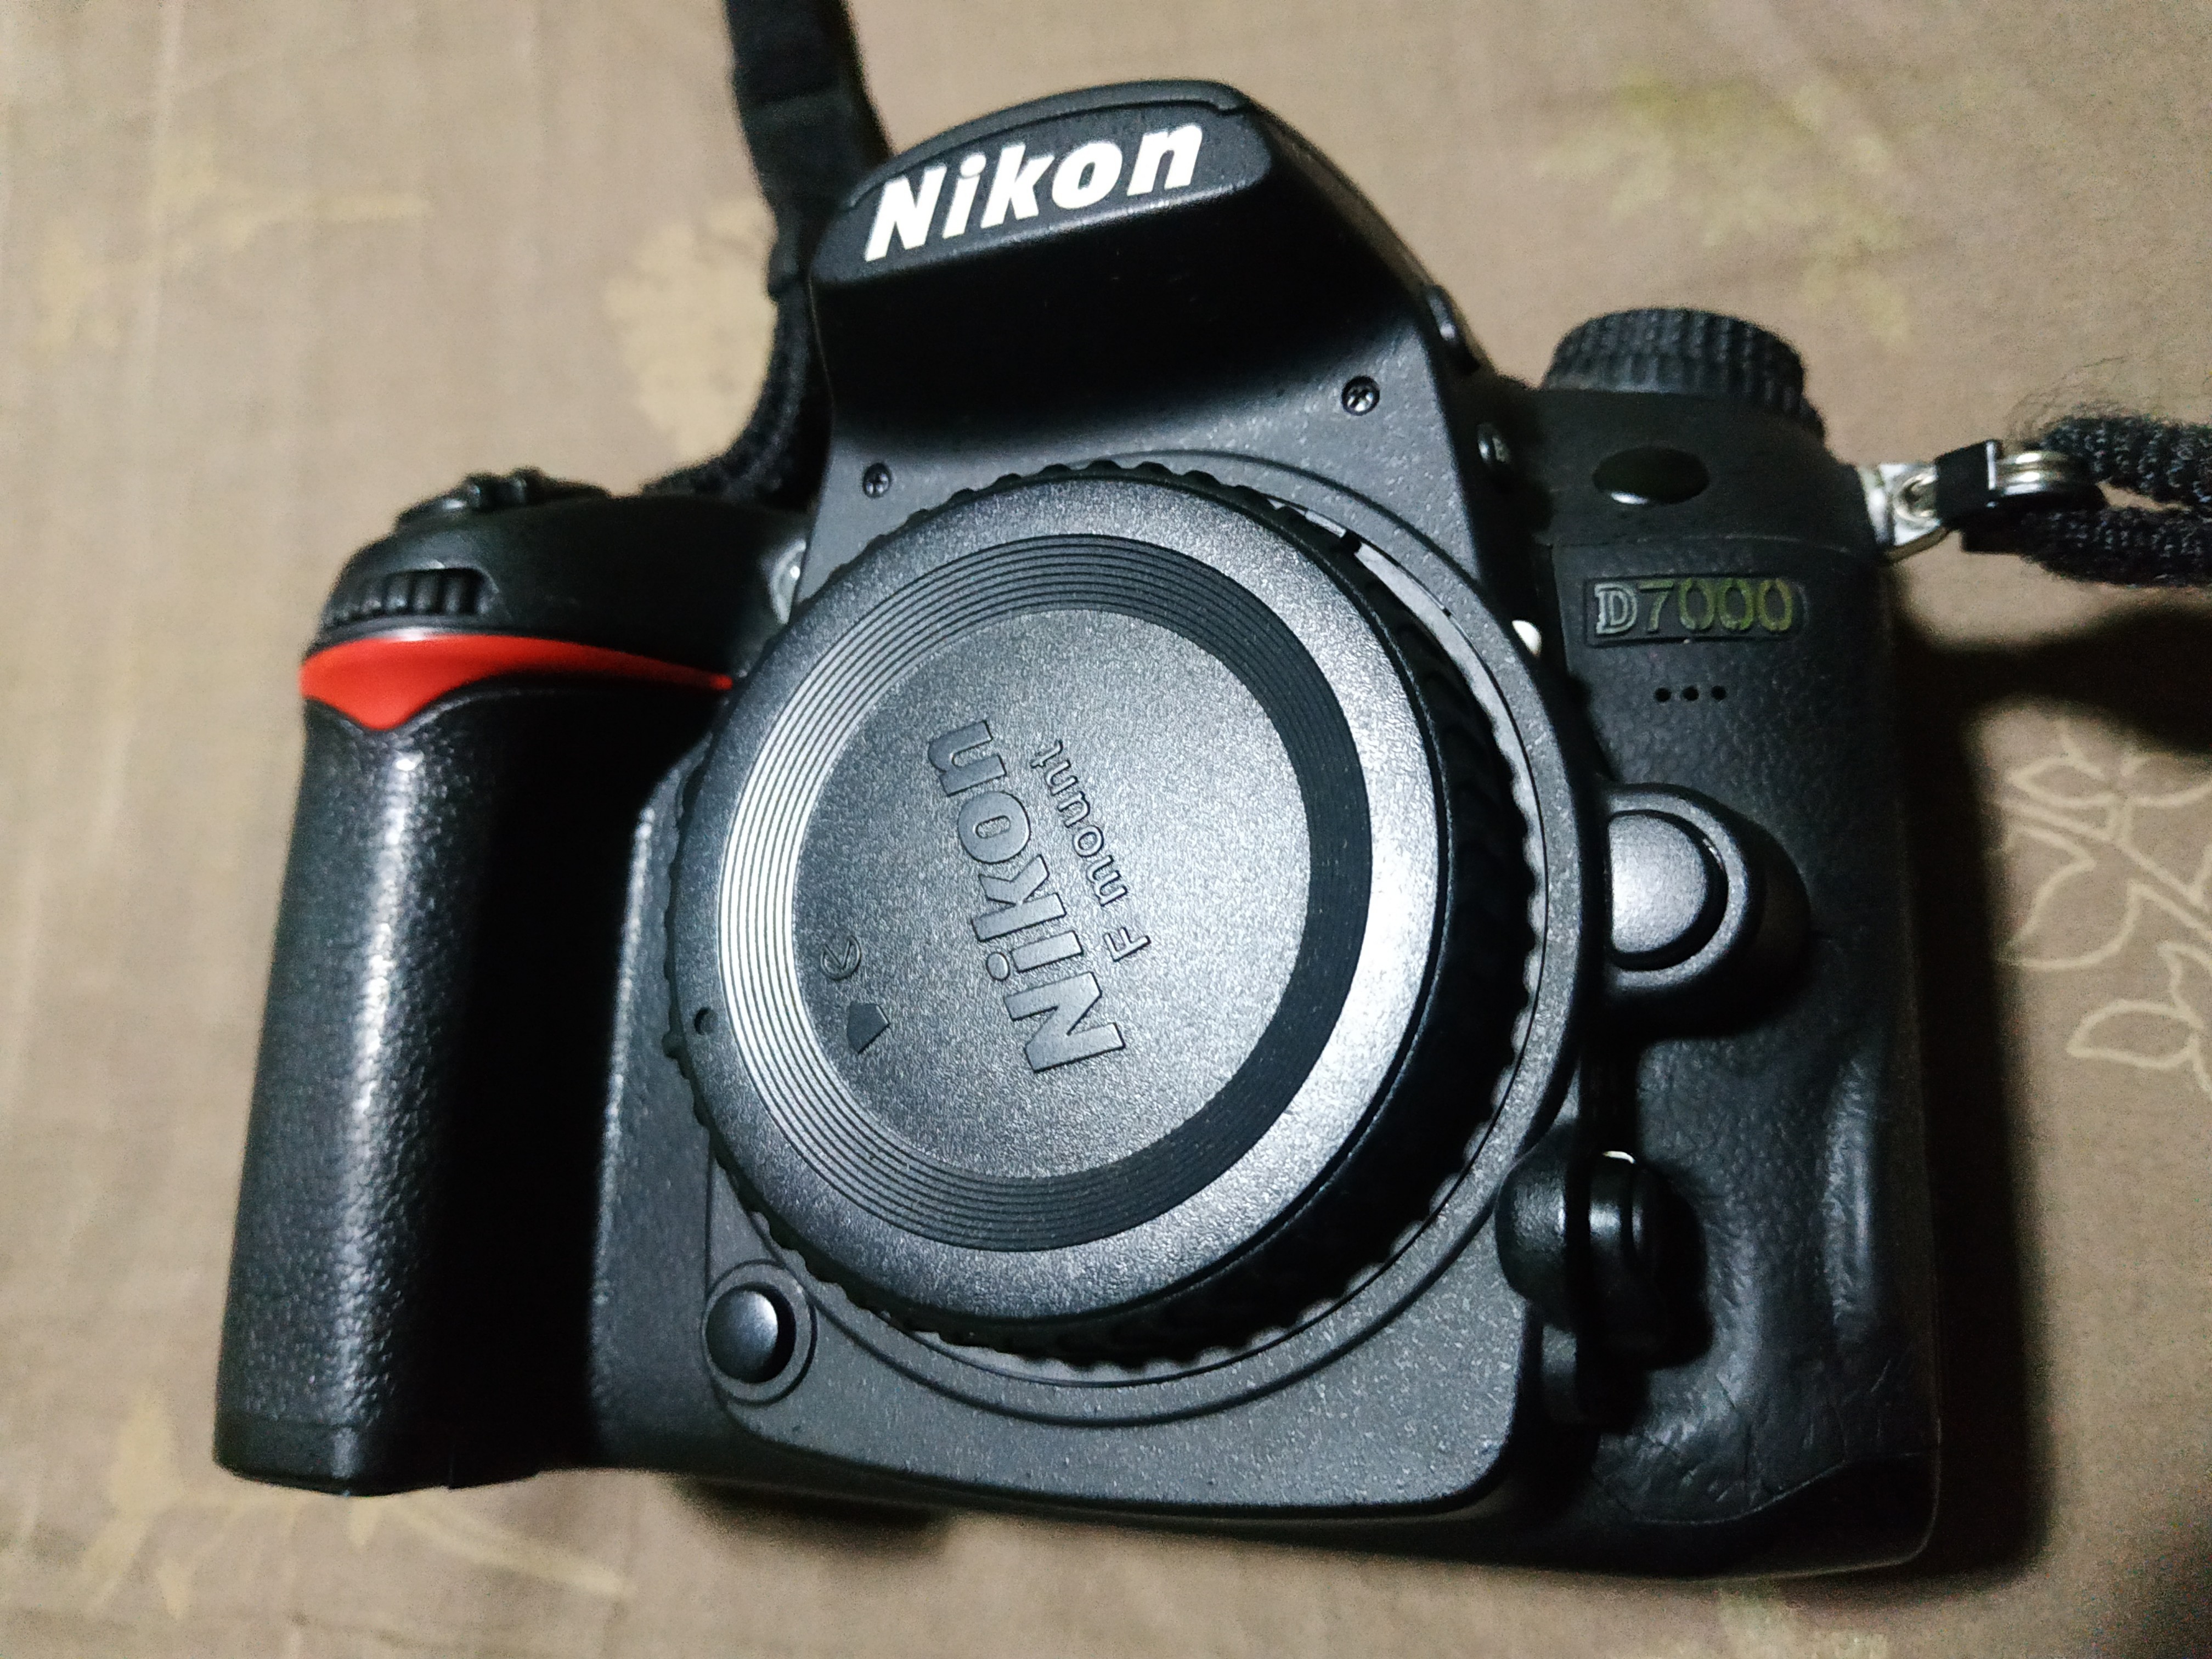 Nikon D7000 with freebies.